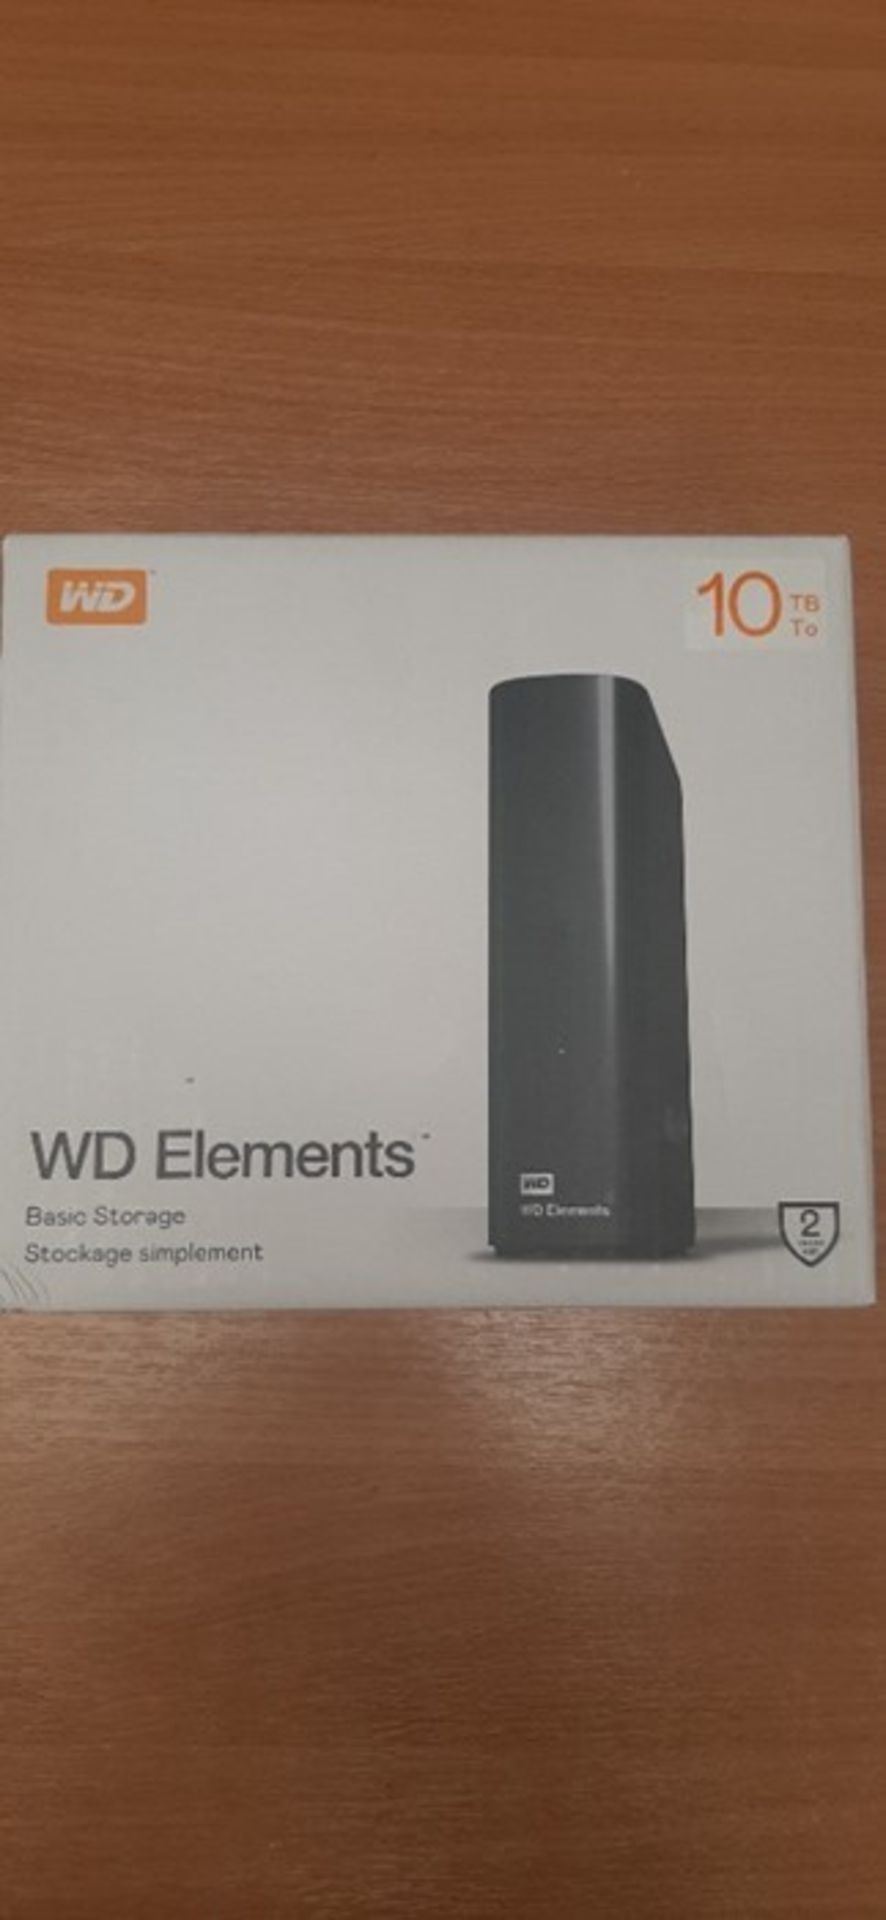 RRP £180.00 WD 10 TB Elements Desktop External Hard Drive - USB 3.0, Black - Image 2 of 3